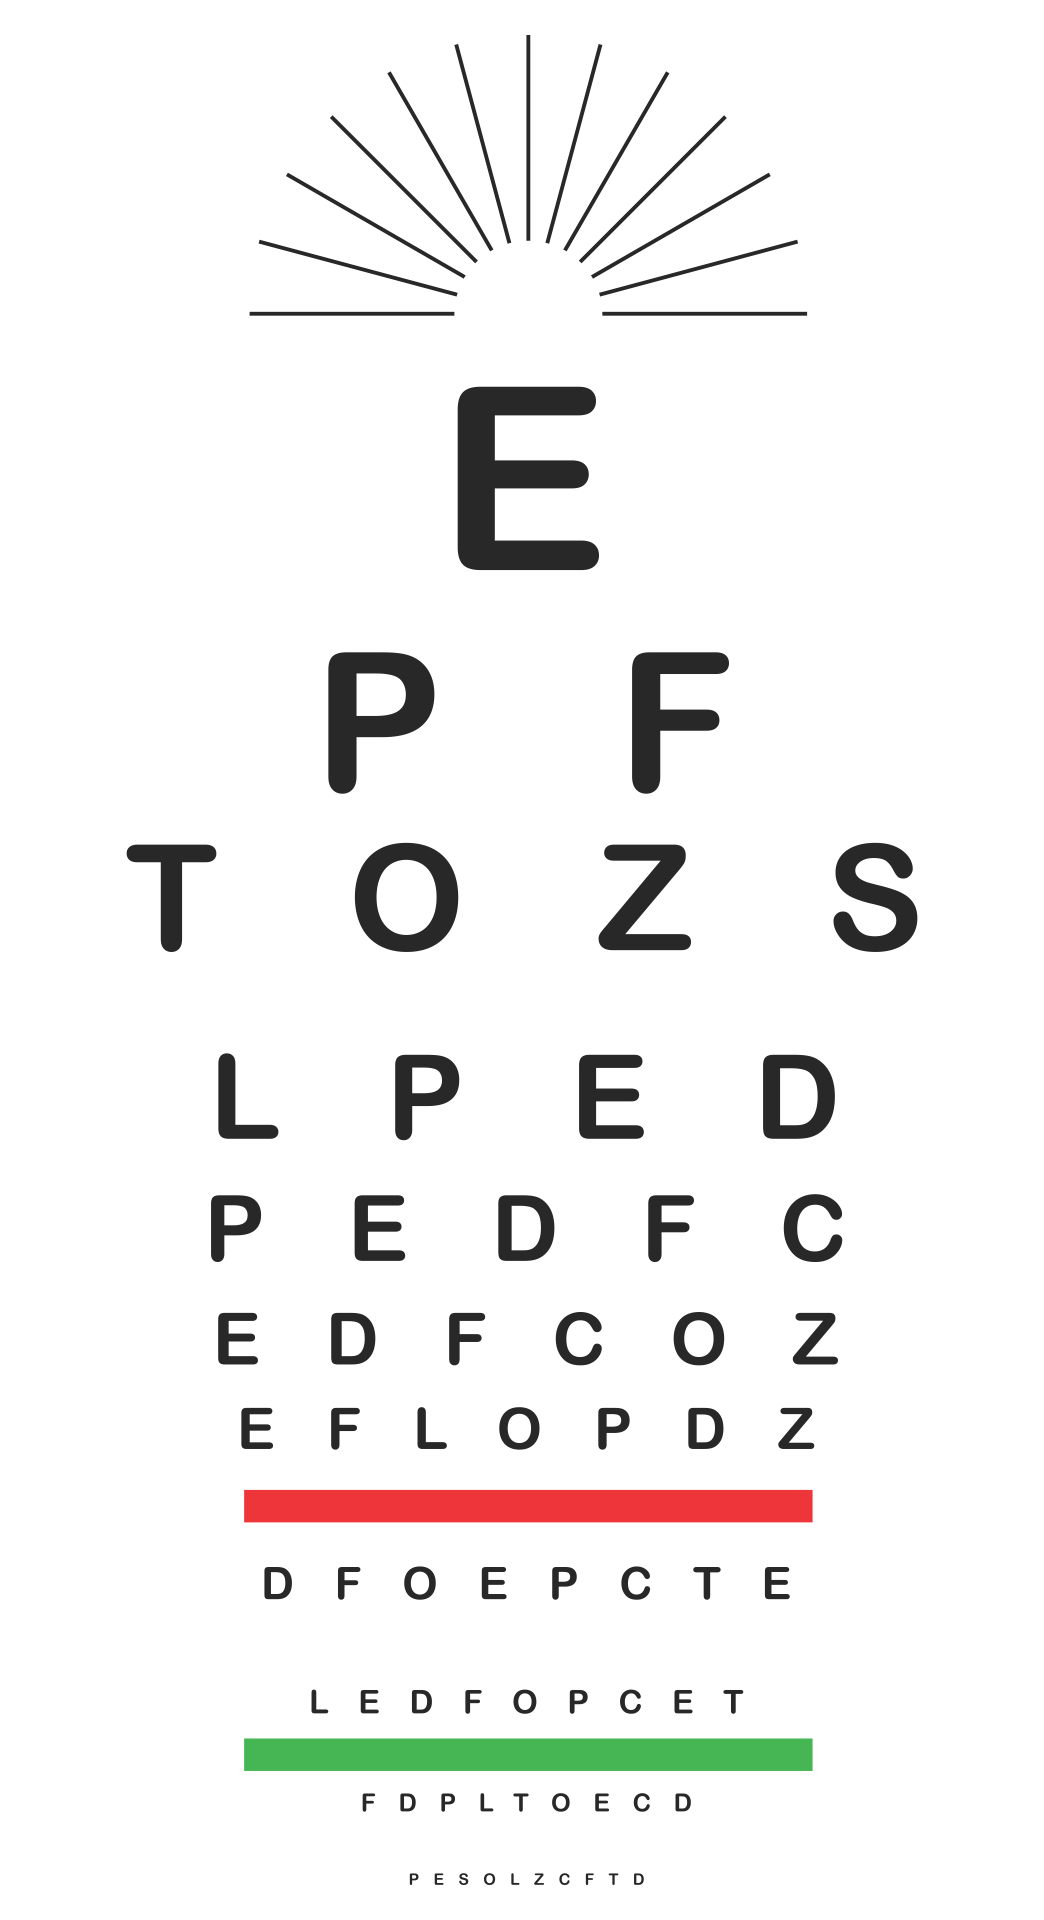 Printable Leaf Eye Chart Free Download